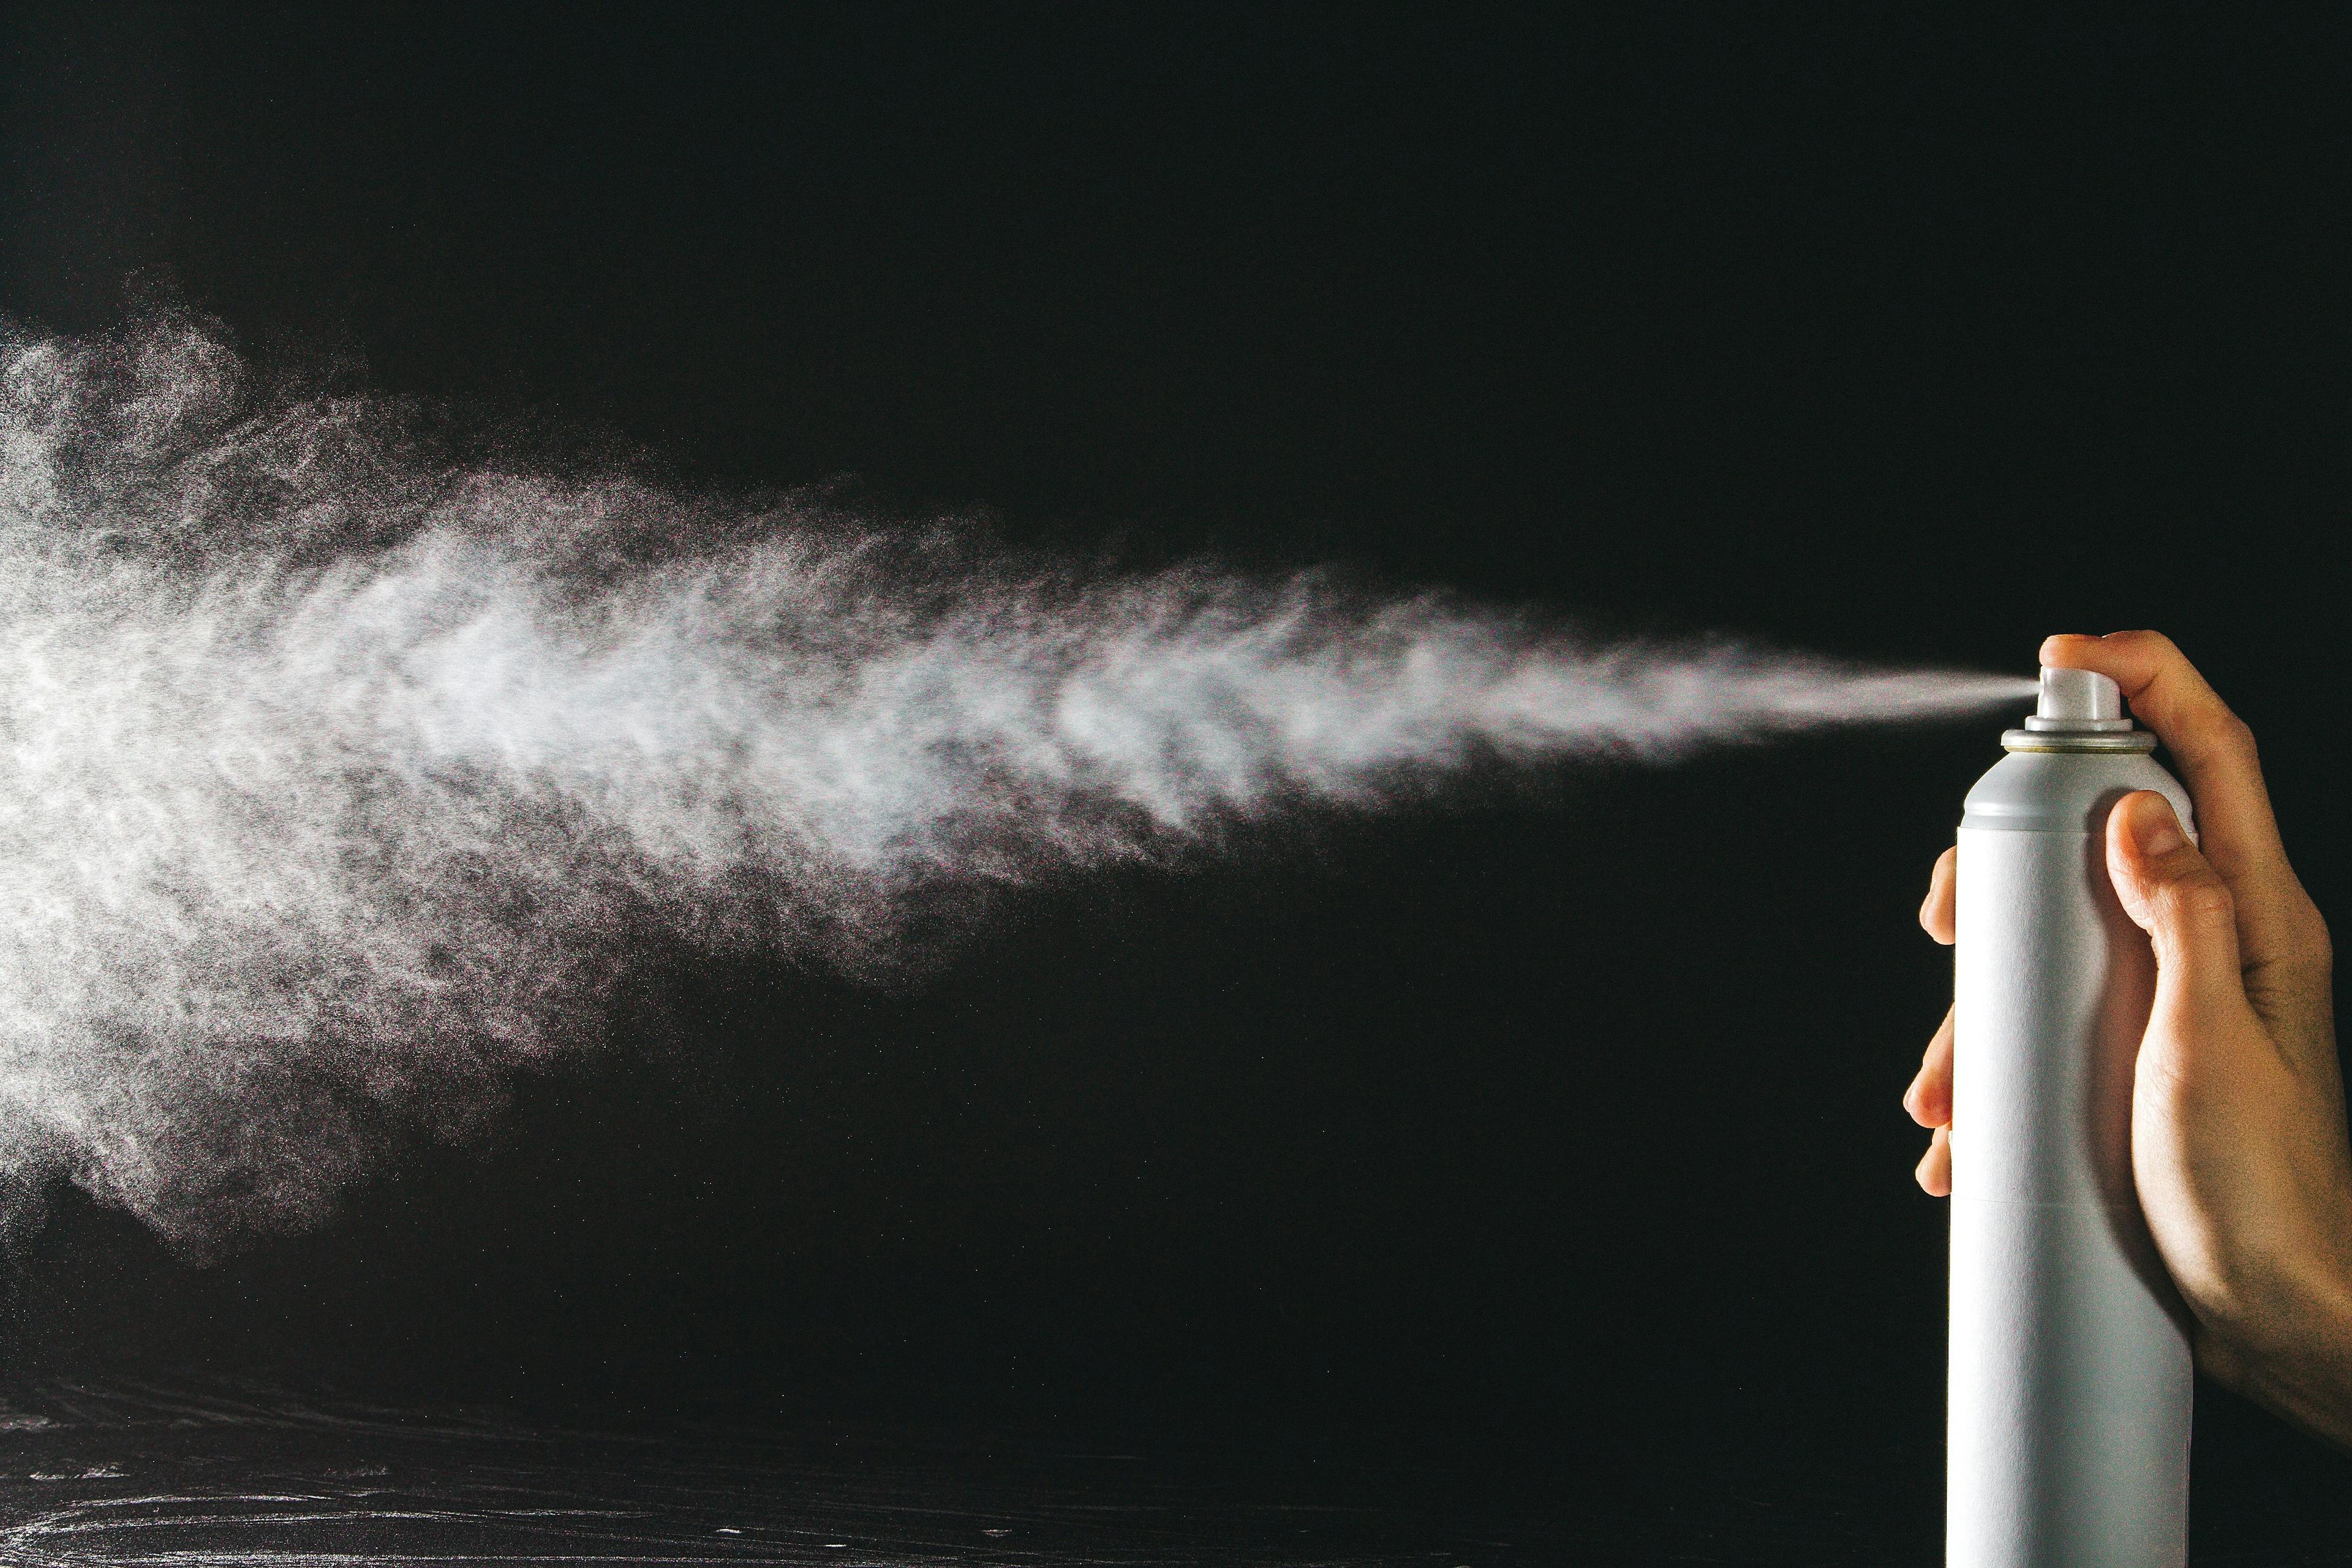 Spraying the aerosol from the spray | Image Credit: © zaharov43 - stock.adobe.com.